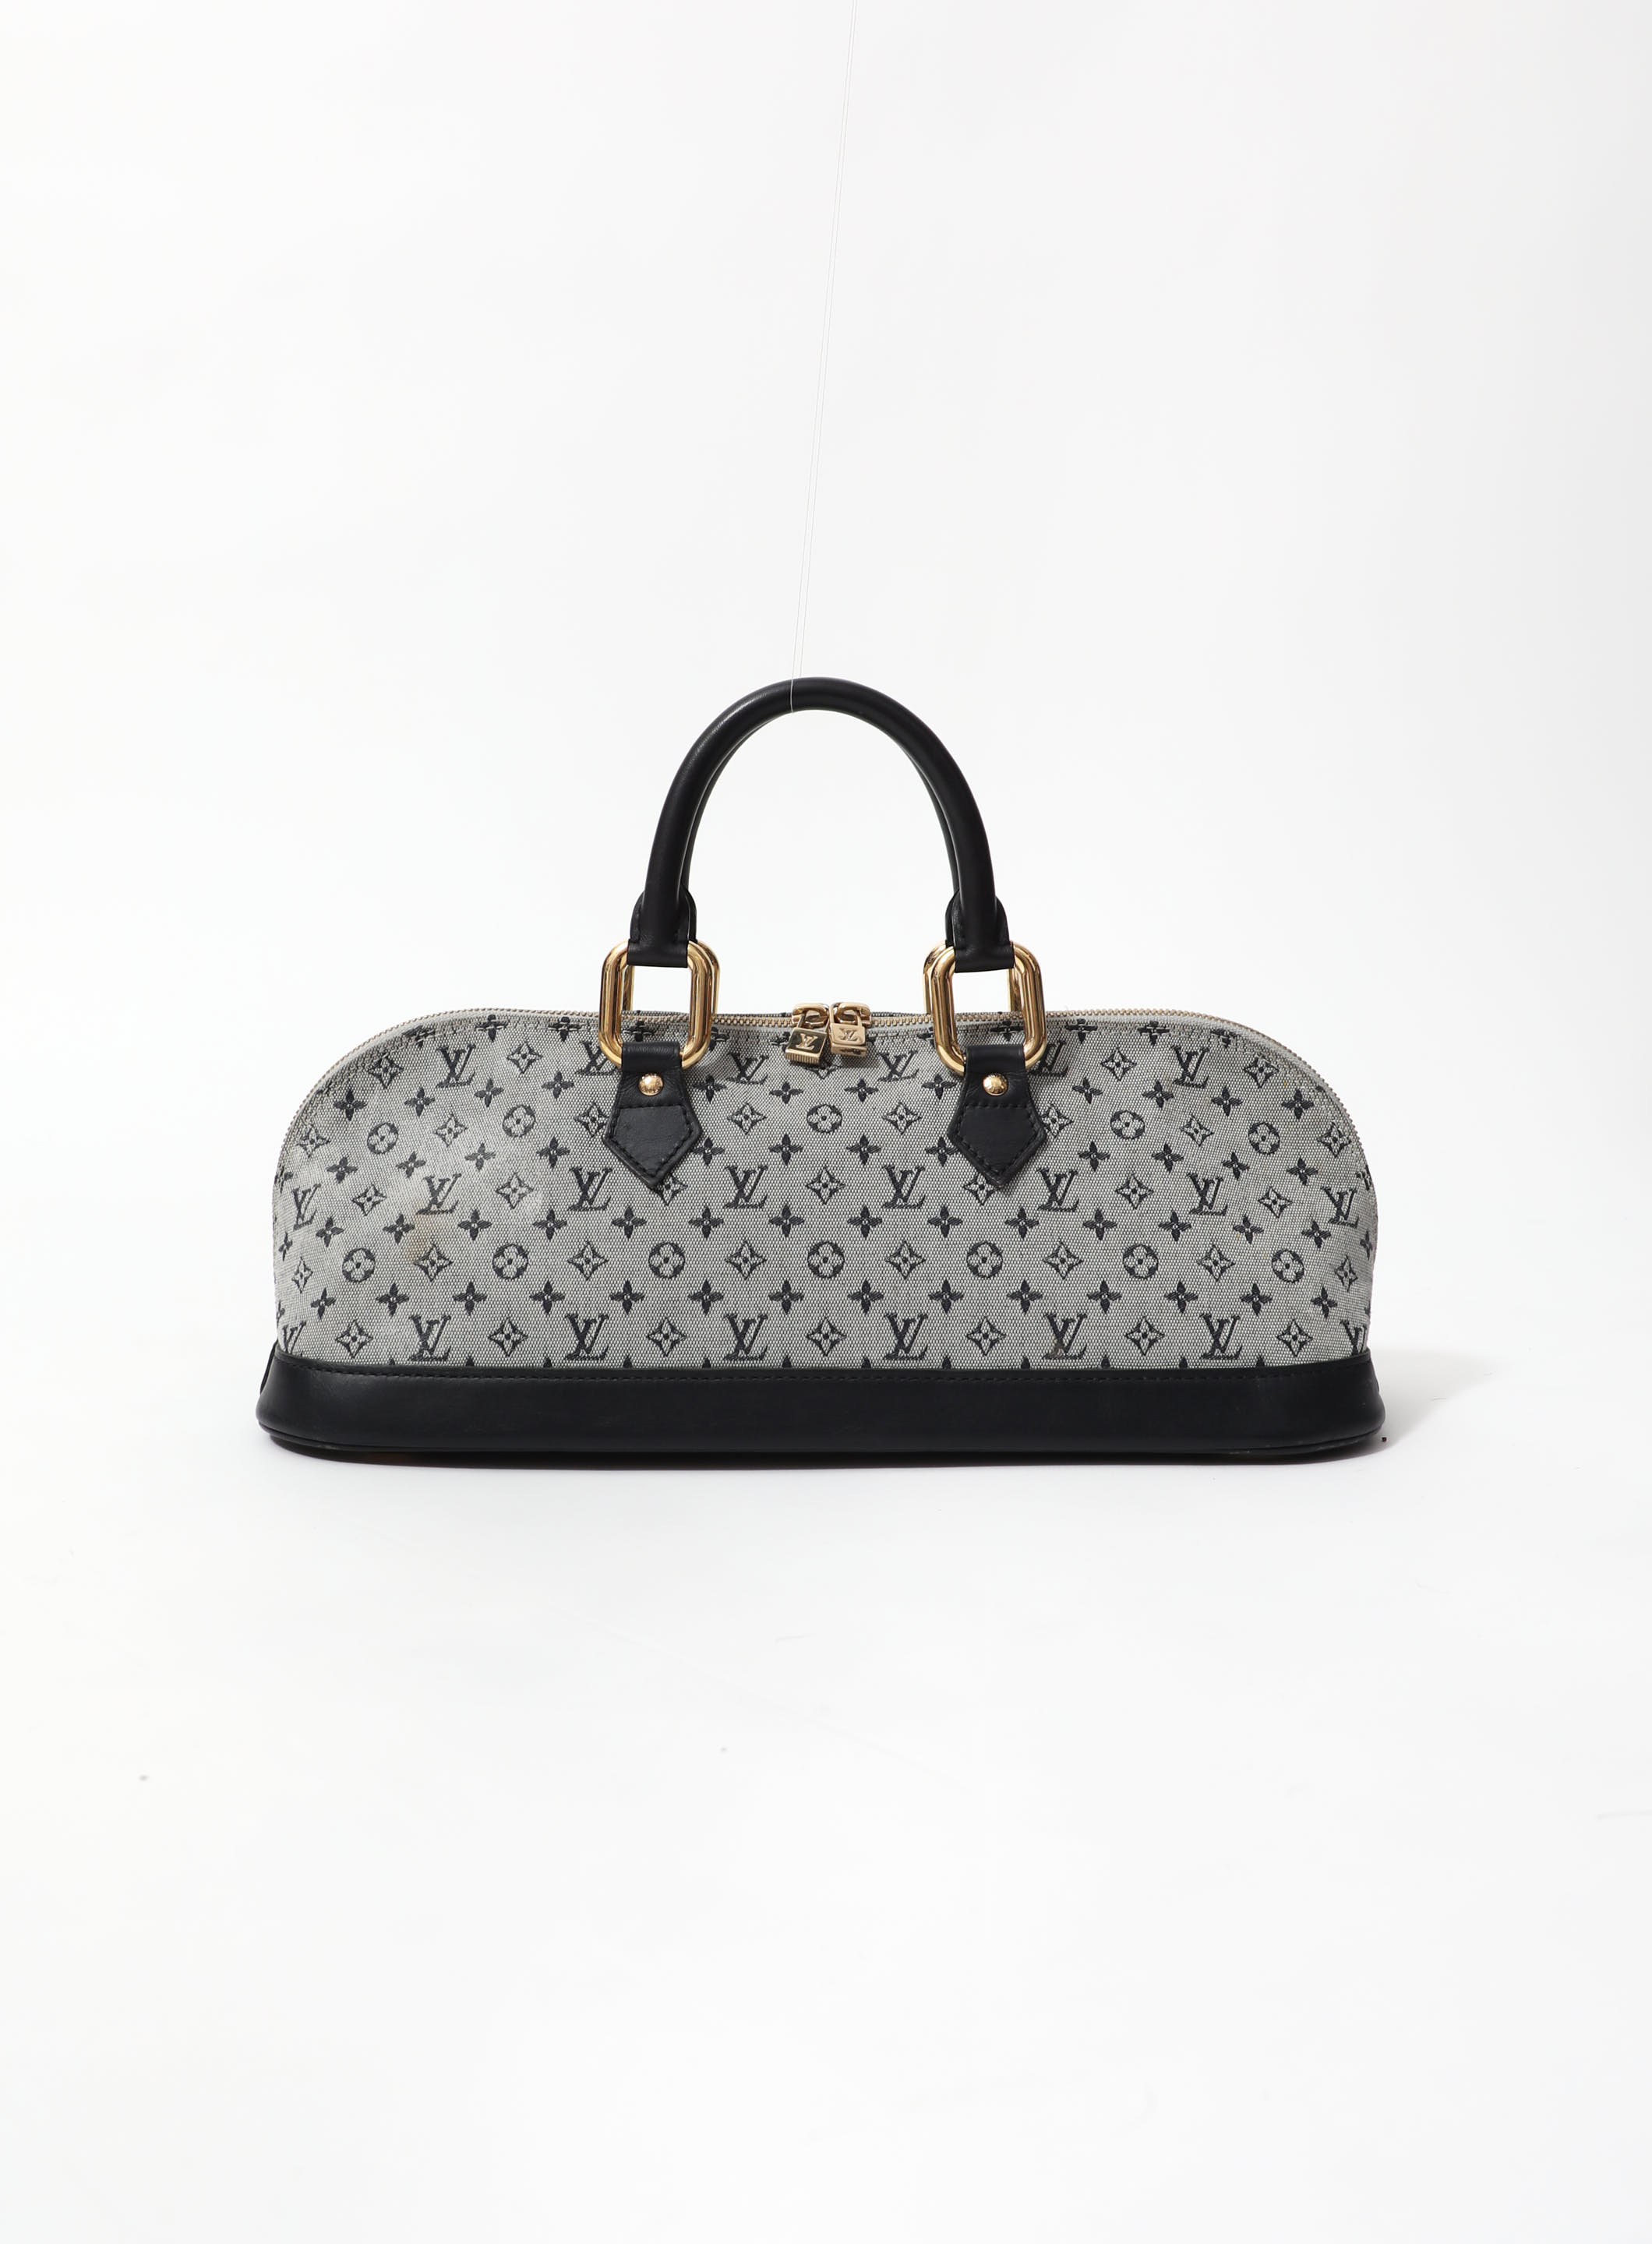 Louis Vuitton Black Leather Embellished Flat Slides Size 36 For